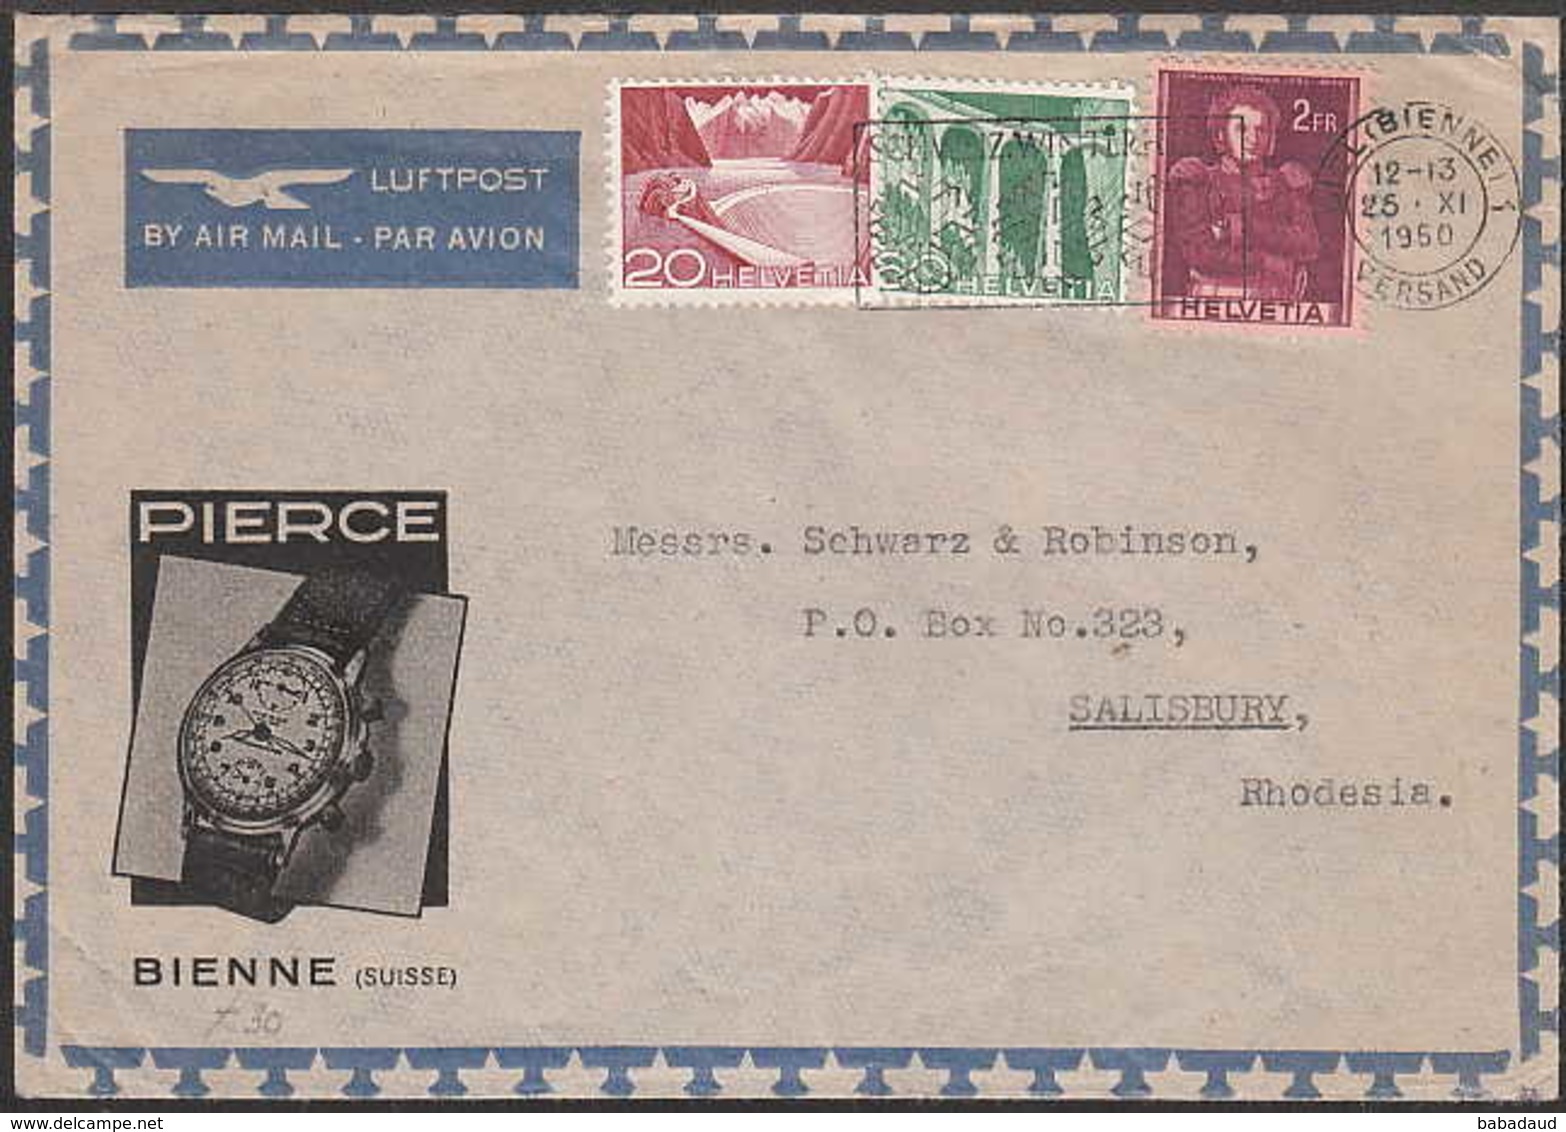 SWITZERLAND, PIERCE (watches) Envelope  3 Colour Franking BIEL (BIENNE) 1 - 25 XI  1950 > Rhodesia - Covers & Documents